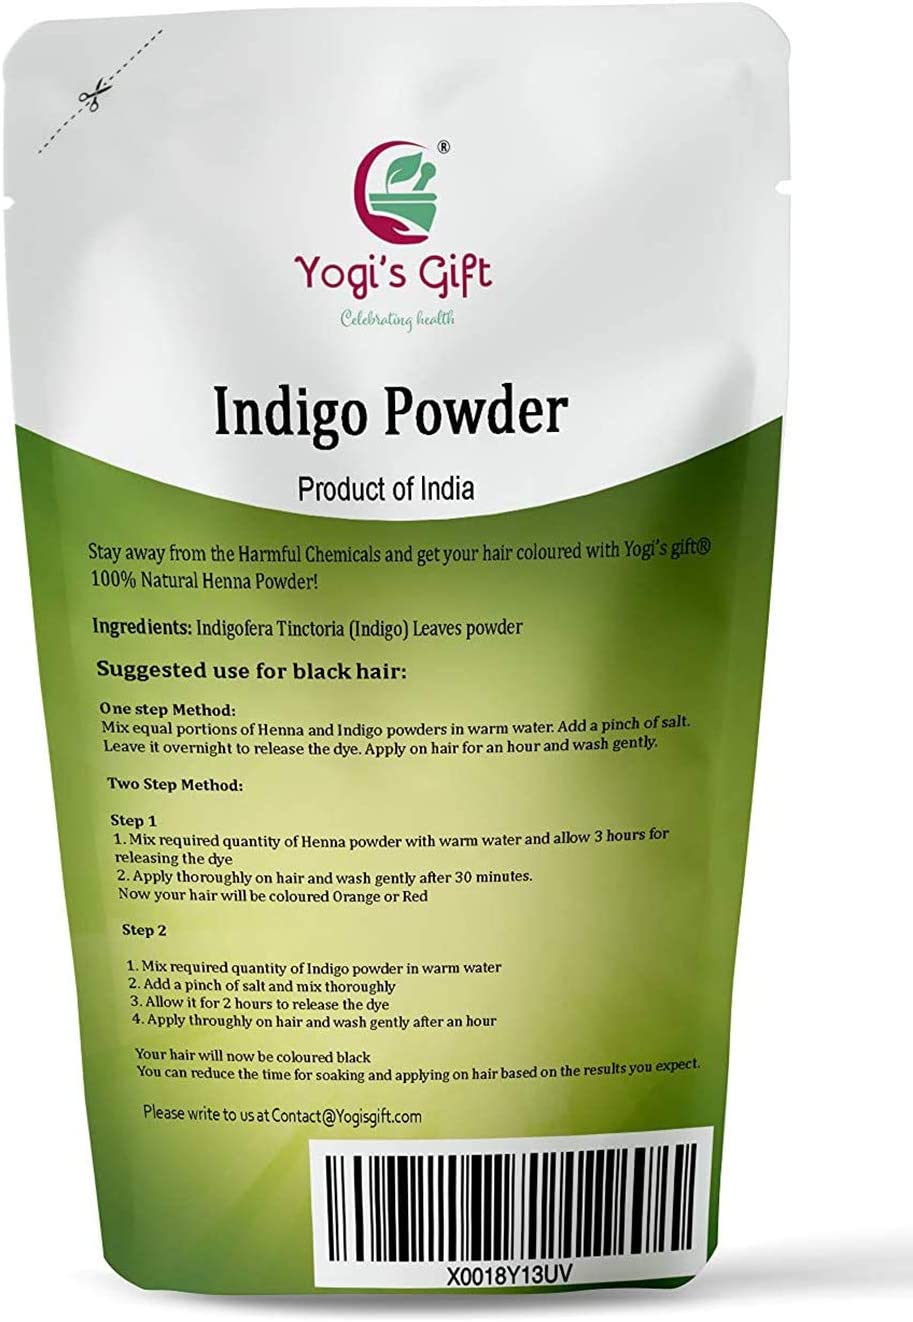 Yogi's Gift Organic Indigo Powder for Hair | Ideal for Black and Dark Hair | Indigofera Tinctoria | Black Henna | 250 grams | 100% Organic, Pure & Natural Hair color